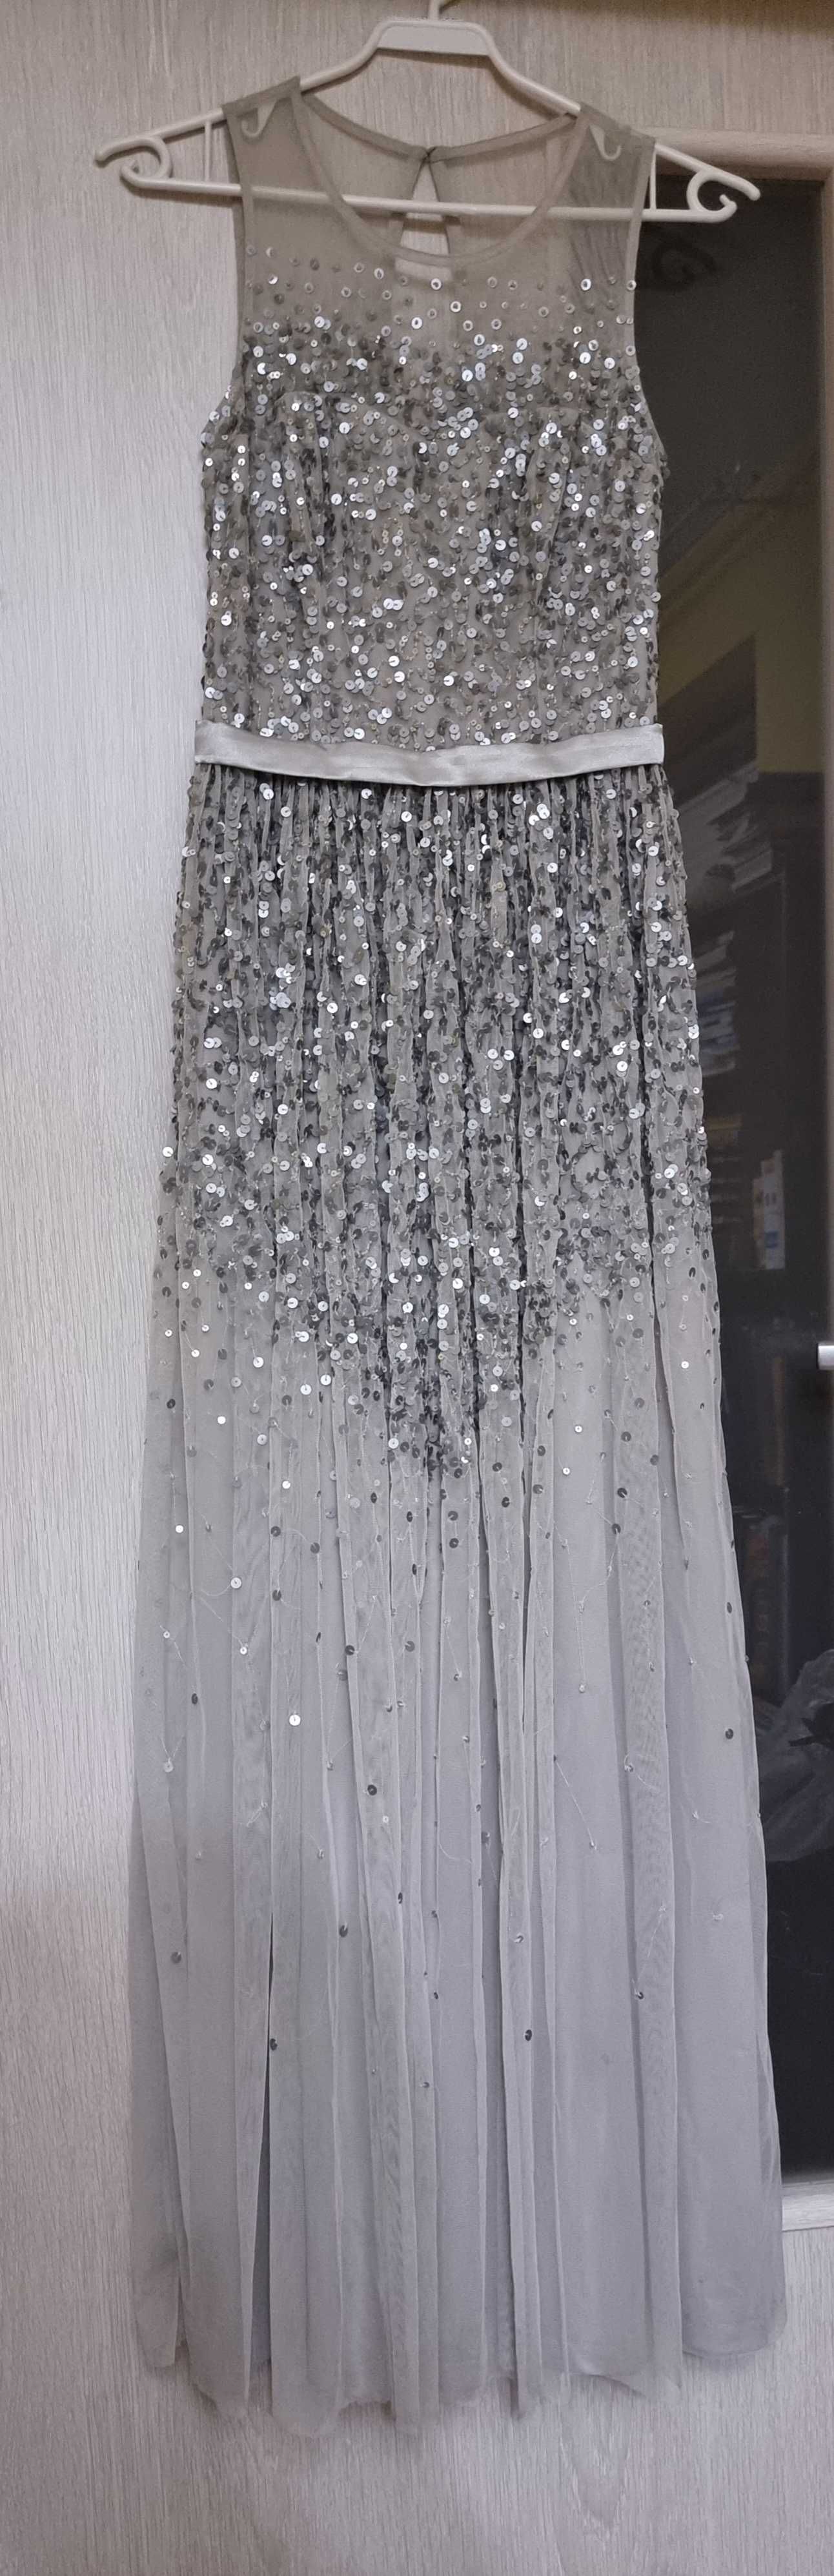 Sukienka Asos srebrna balowa cekiny wesele studniówka XS 34